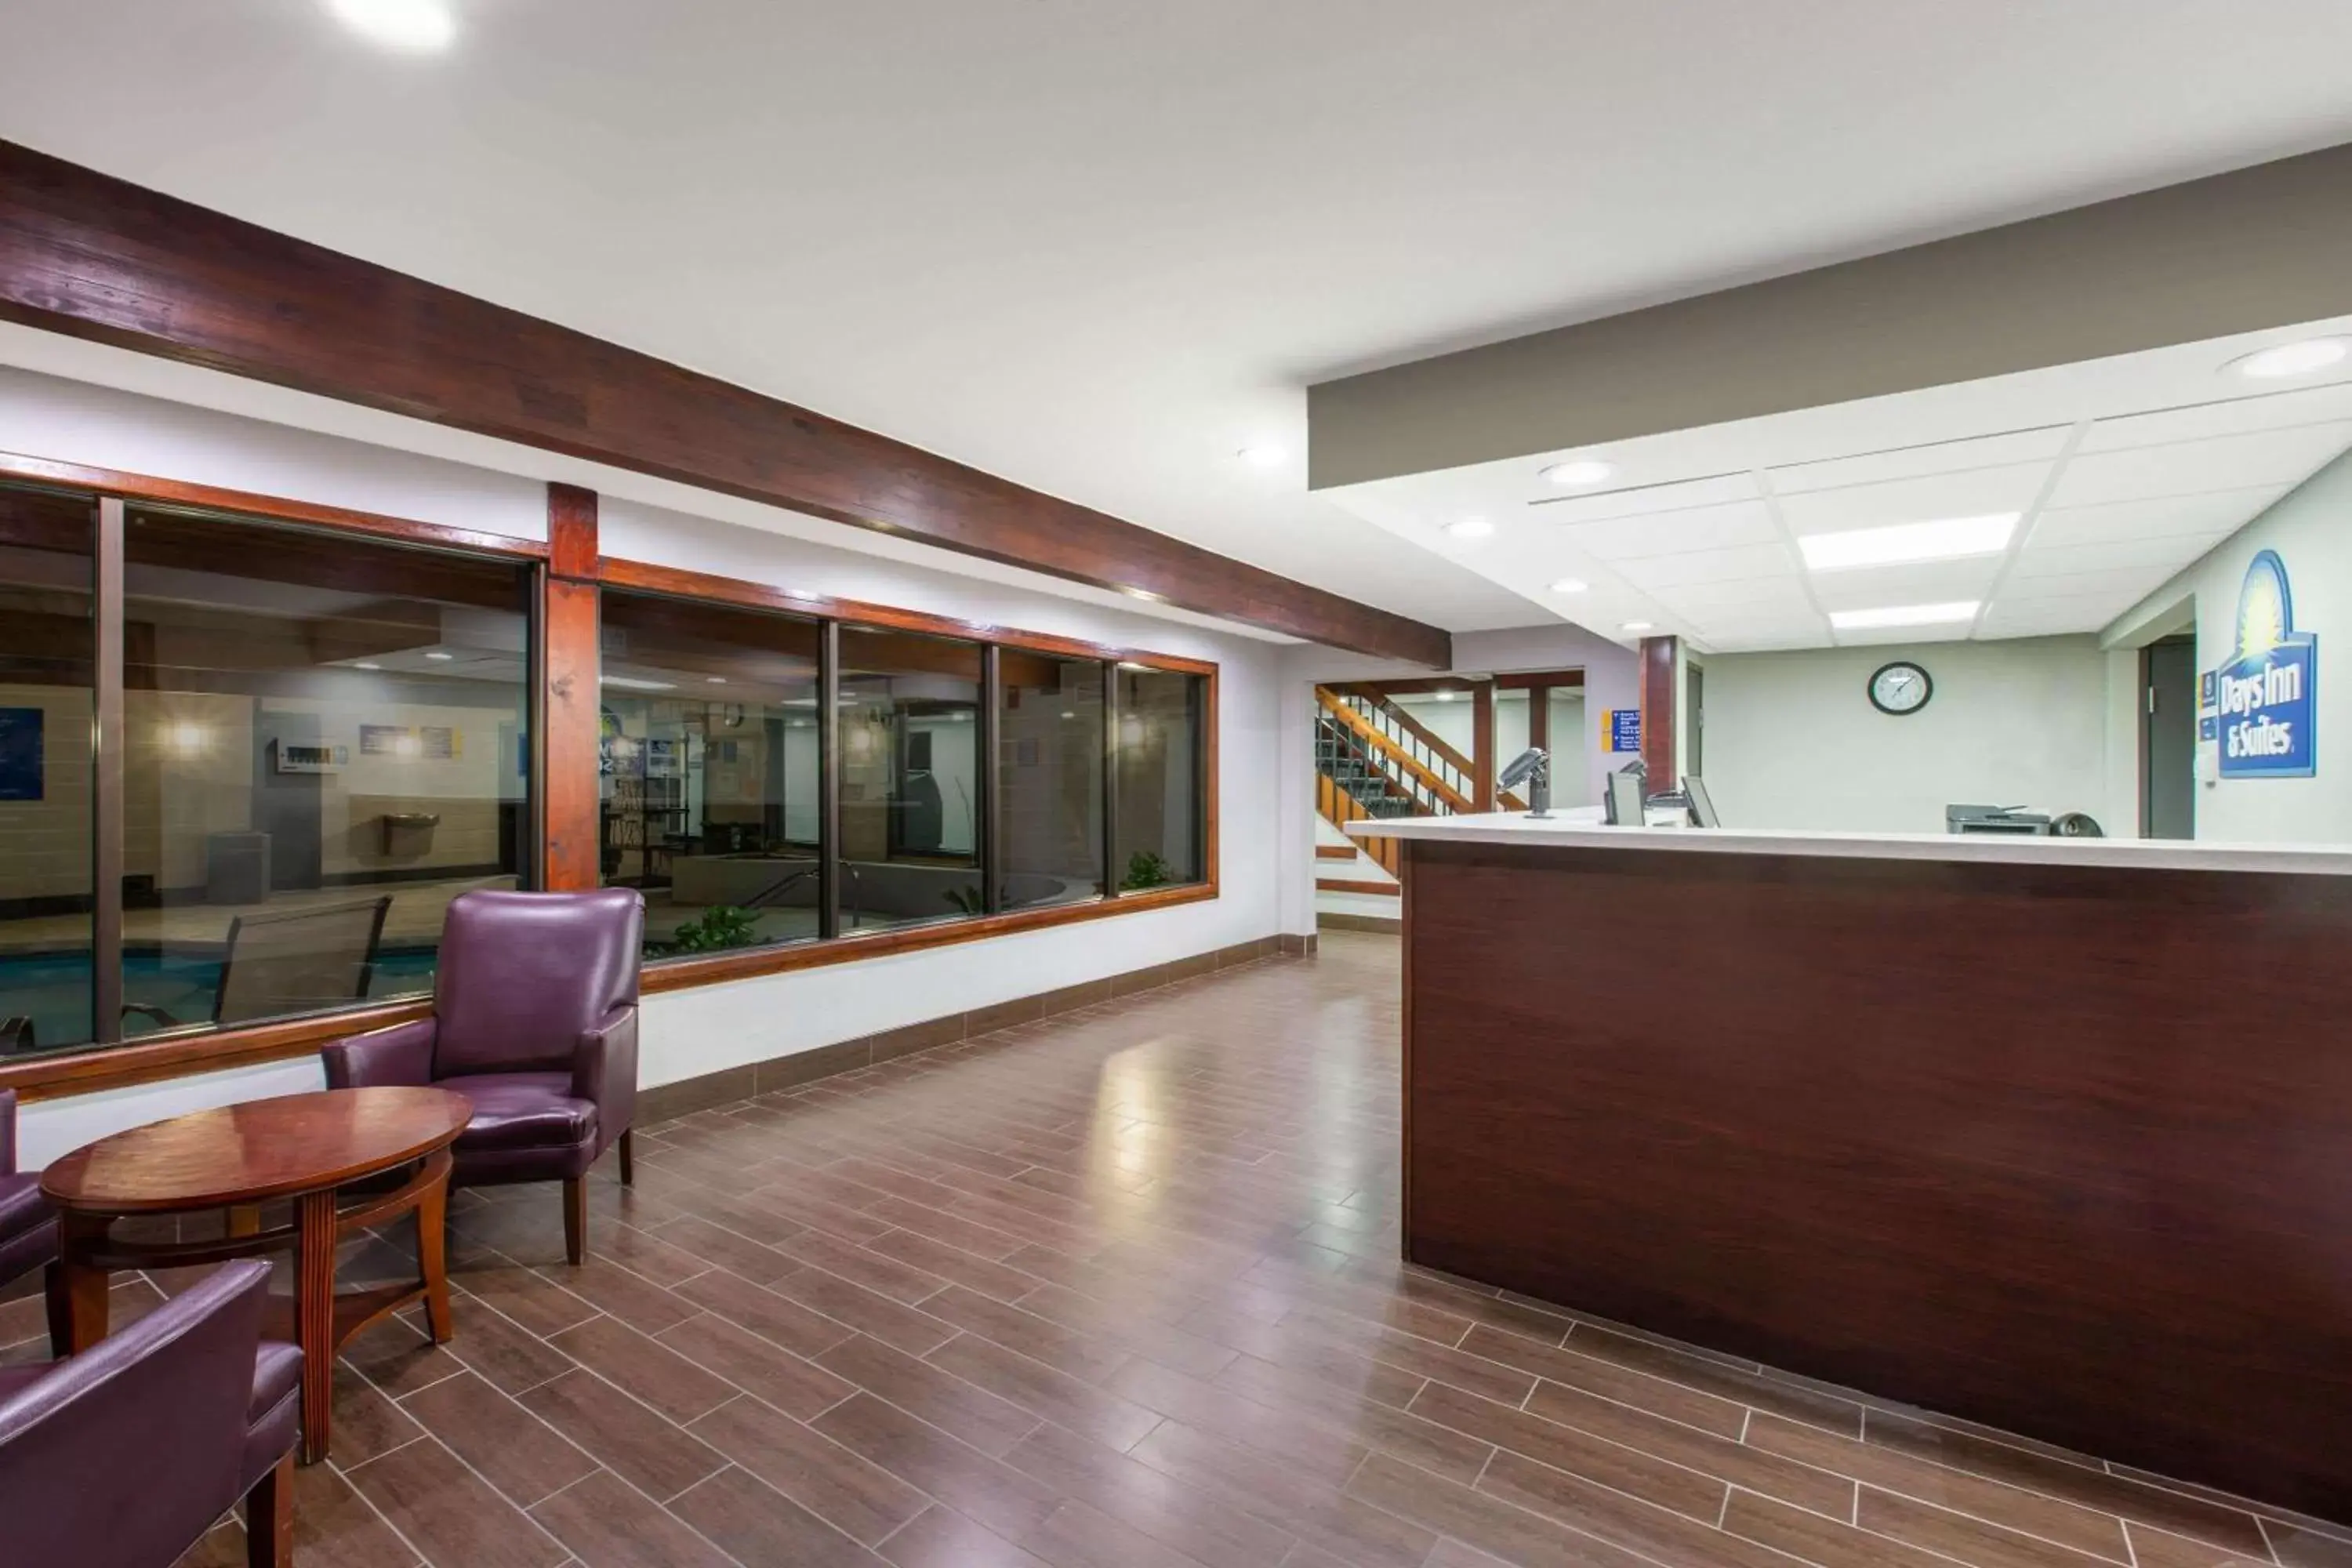 Lobby or reception, Lobby/Reception in Days Inn & Suites by Wyndham Wisconsin Dells